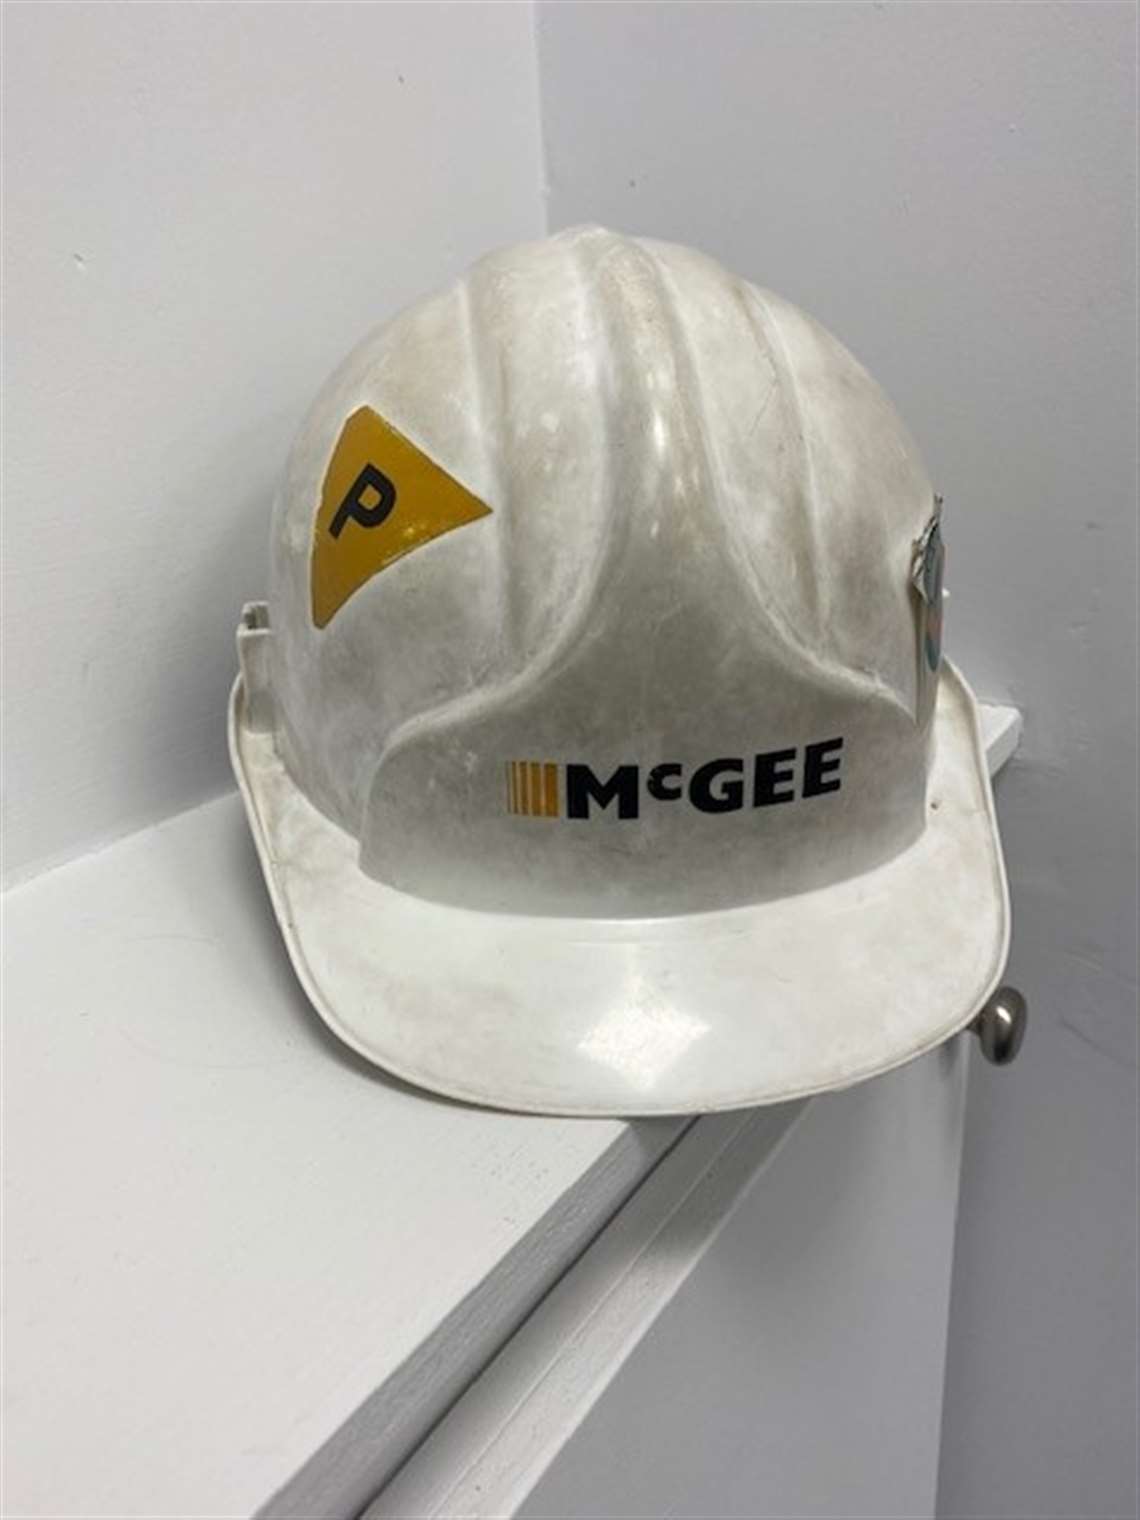 A McGee hard hat